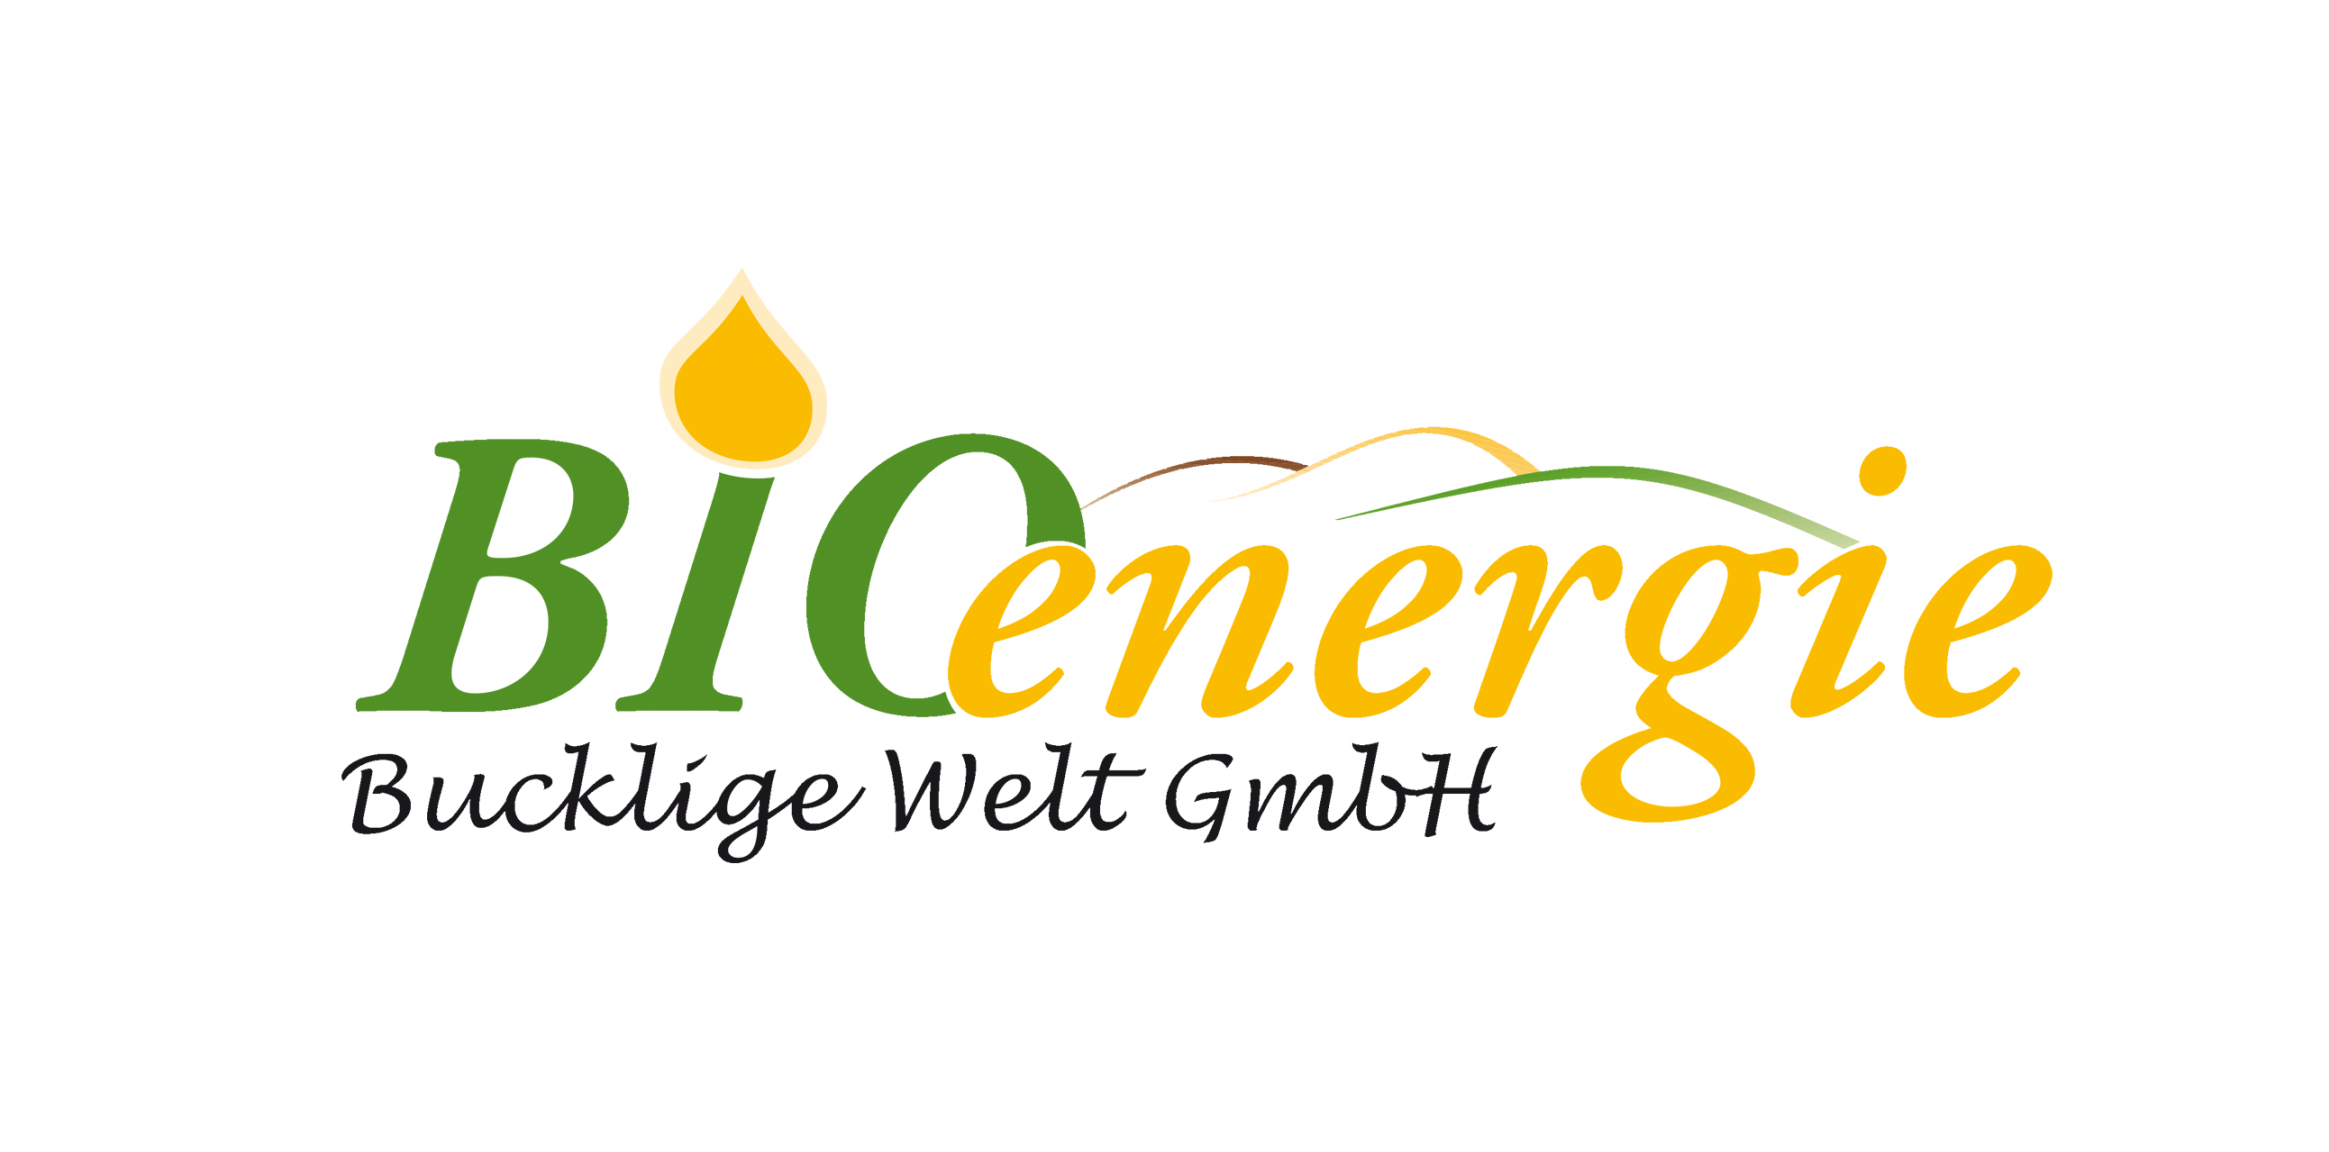 Bioenergie Bucklige Welt GmbH